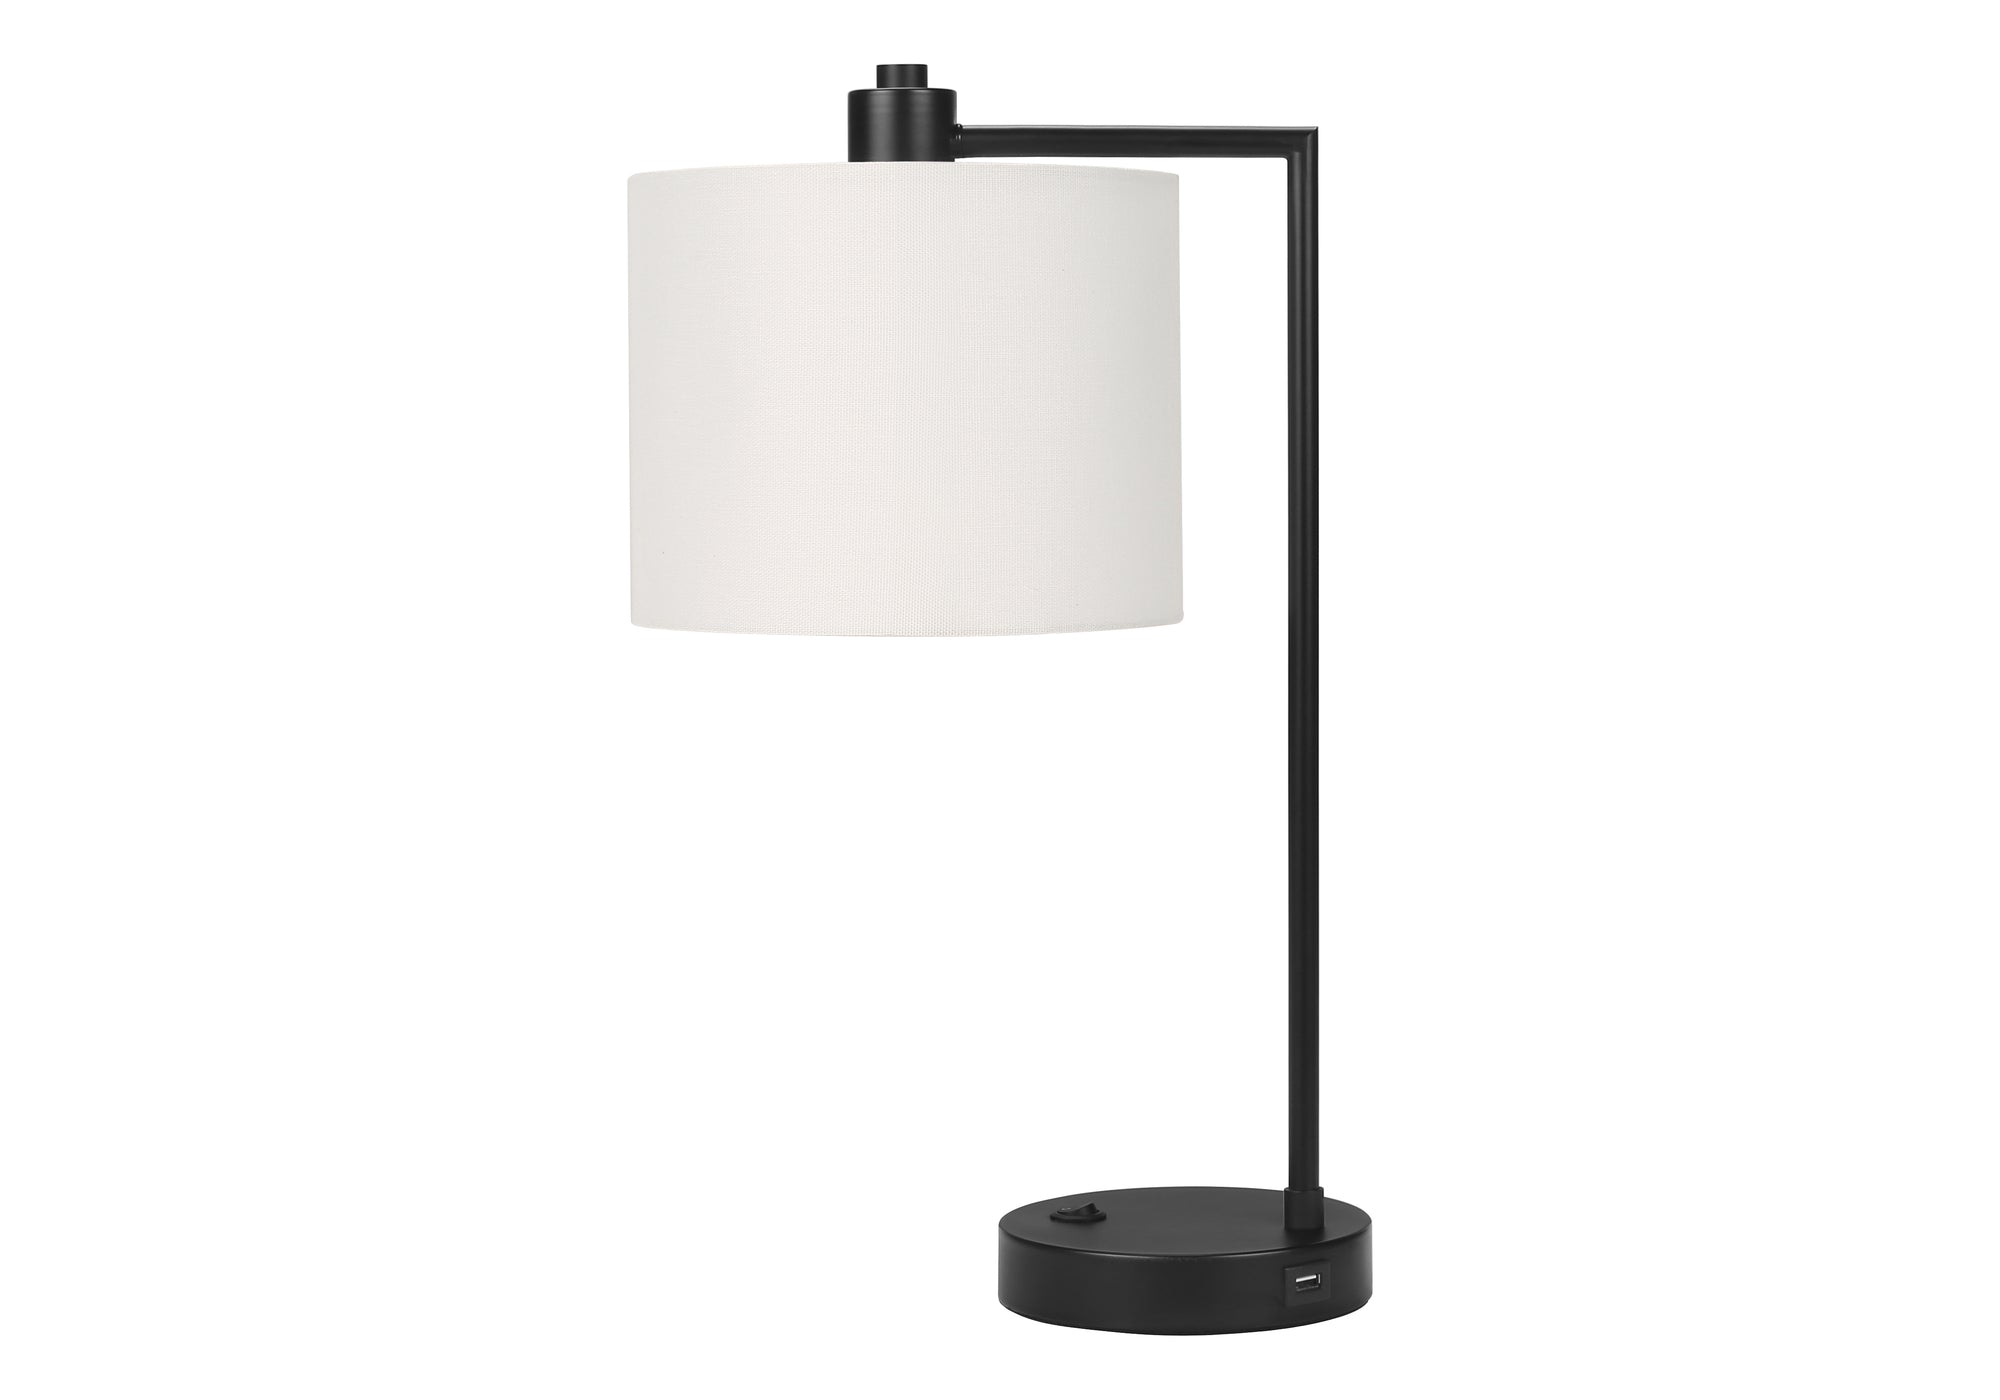 MN-259646    Lighting, 19"H, Table Lamp, Usb Port Included, Black Metal, Ivory / Cream Shade, Modern